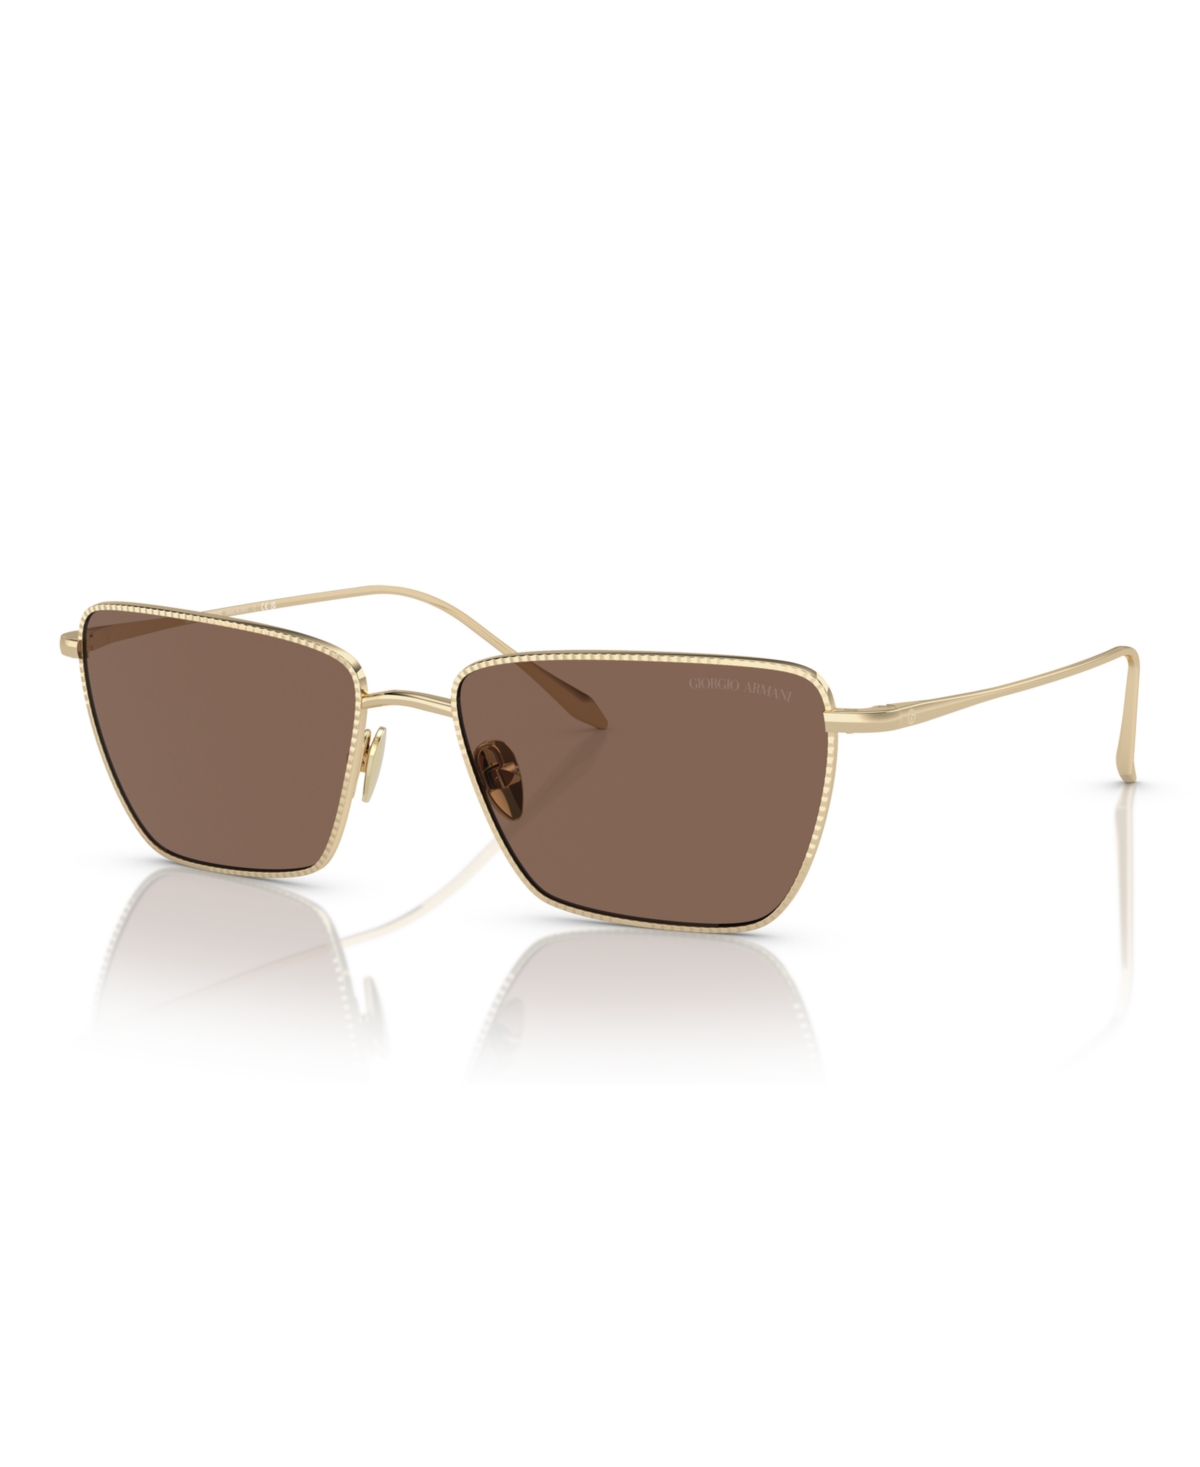 Women's Sunglasses AR6153 - Pale Gold